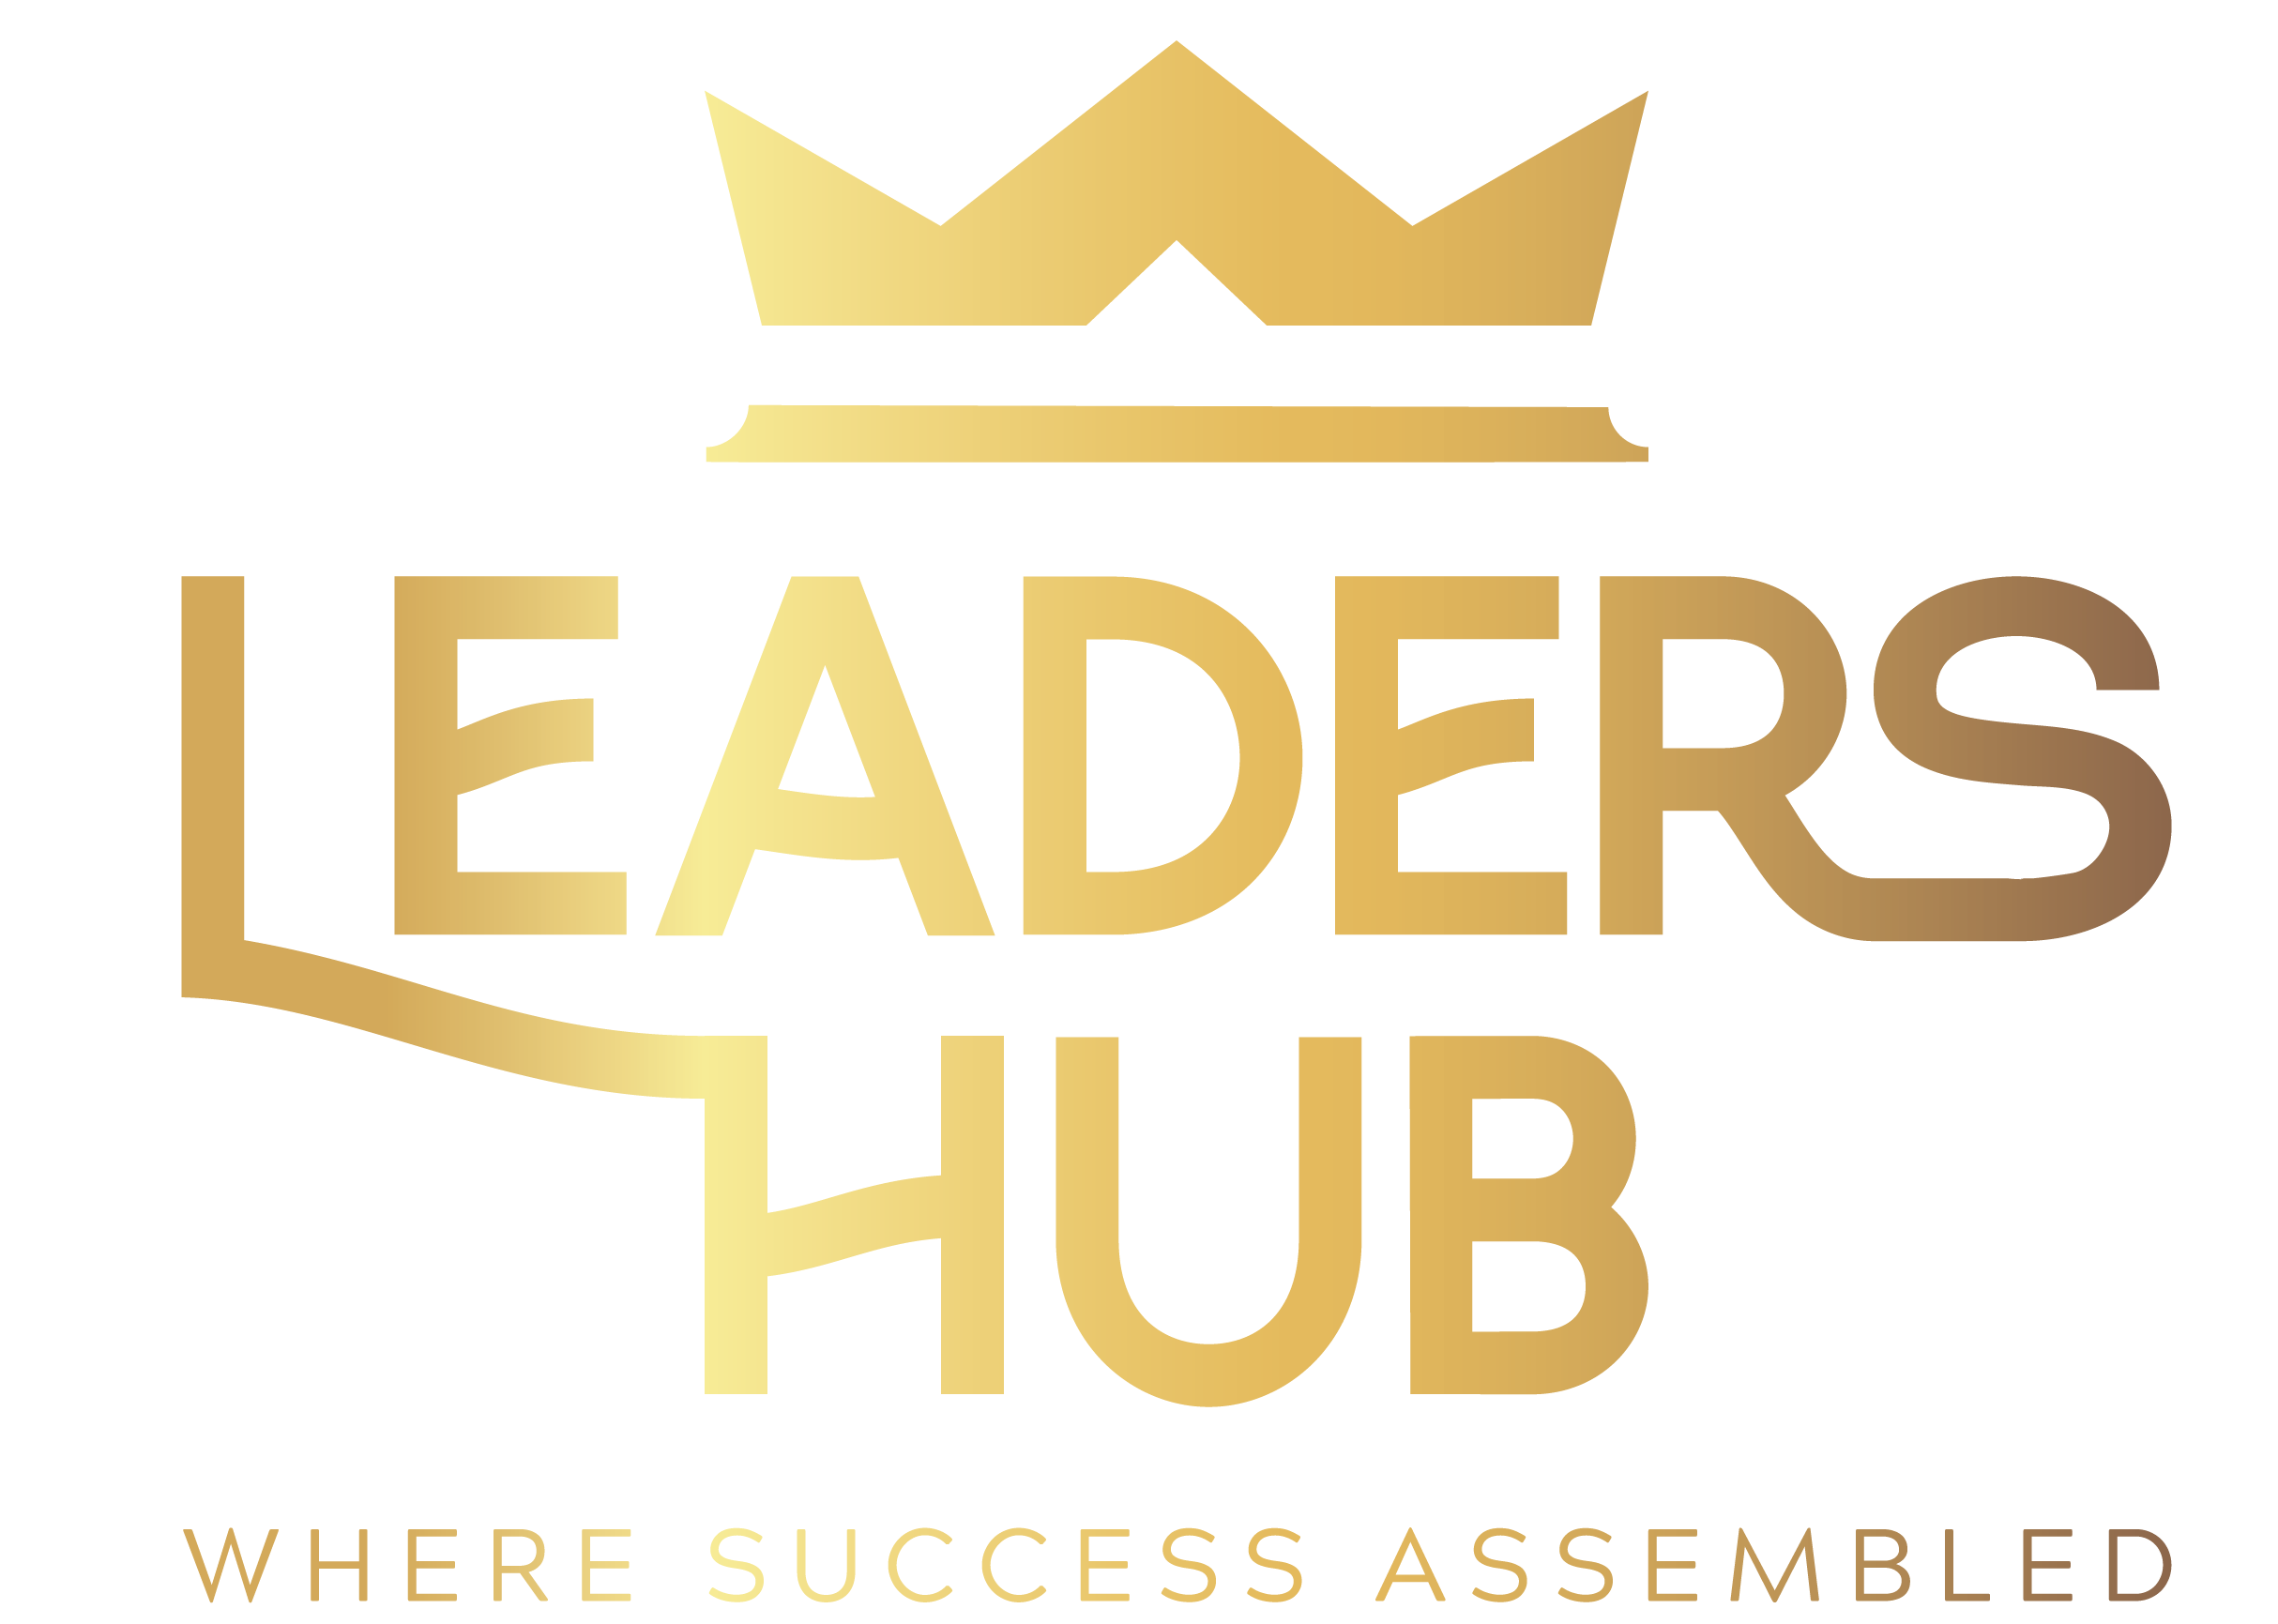 The Leaders Hub